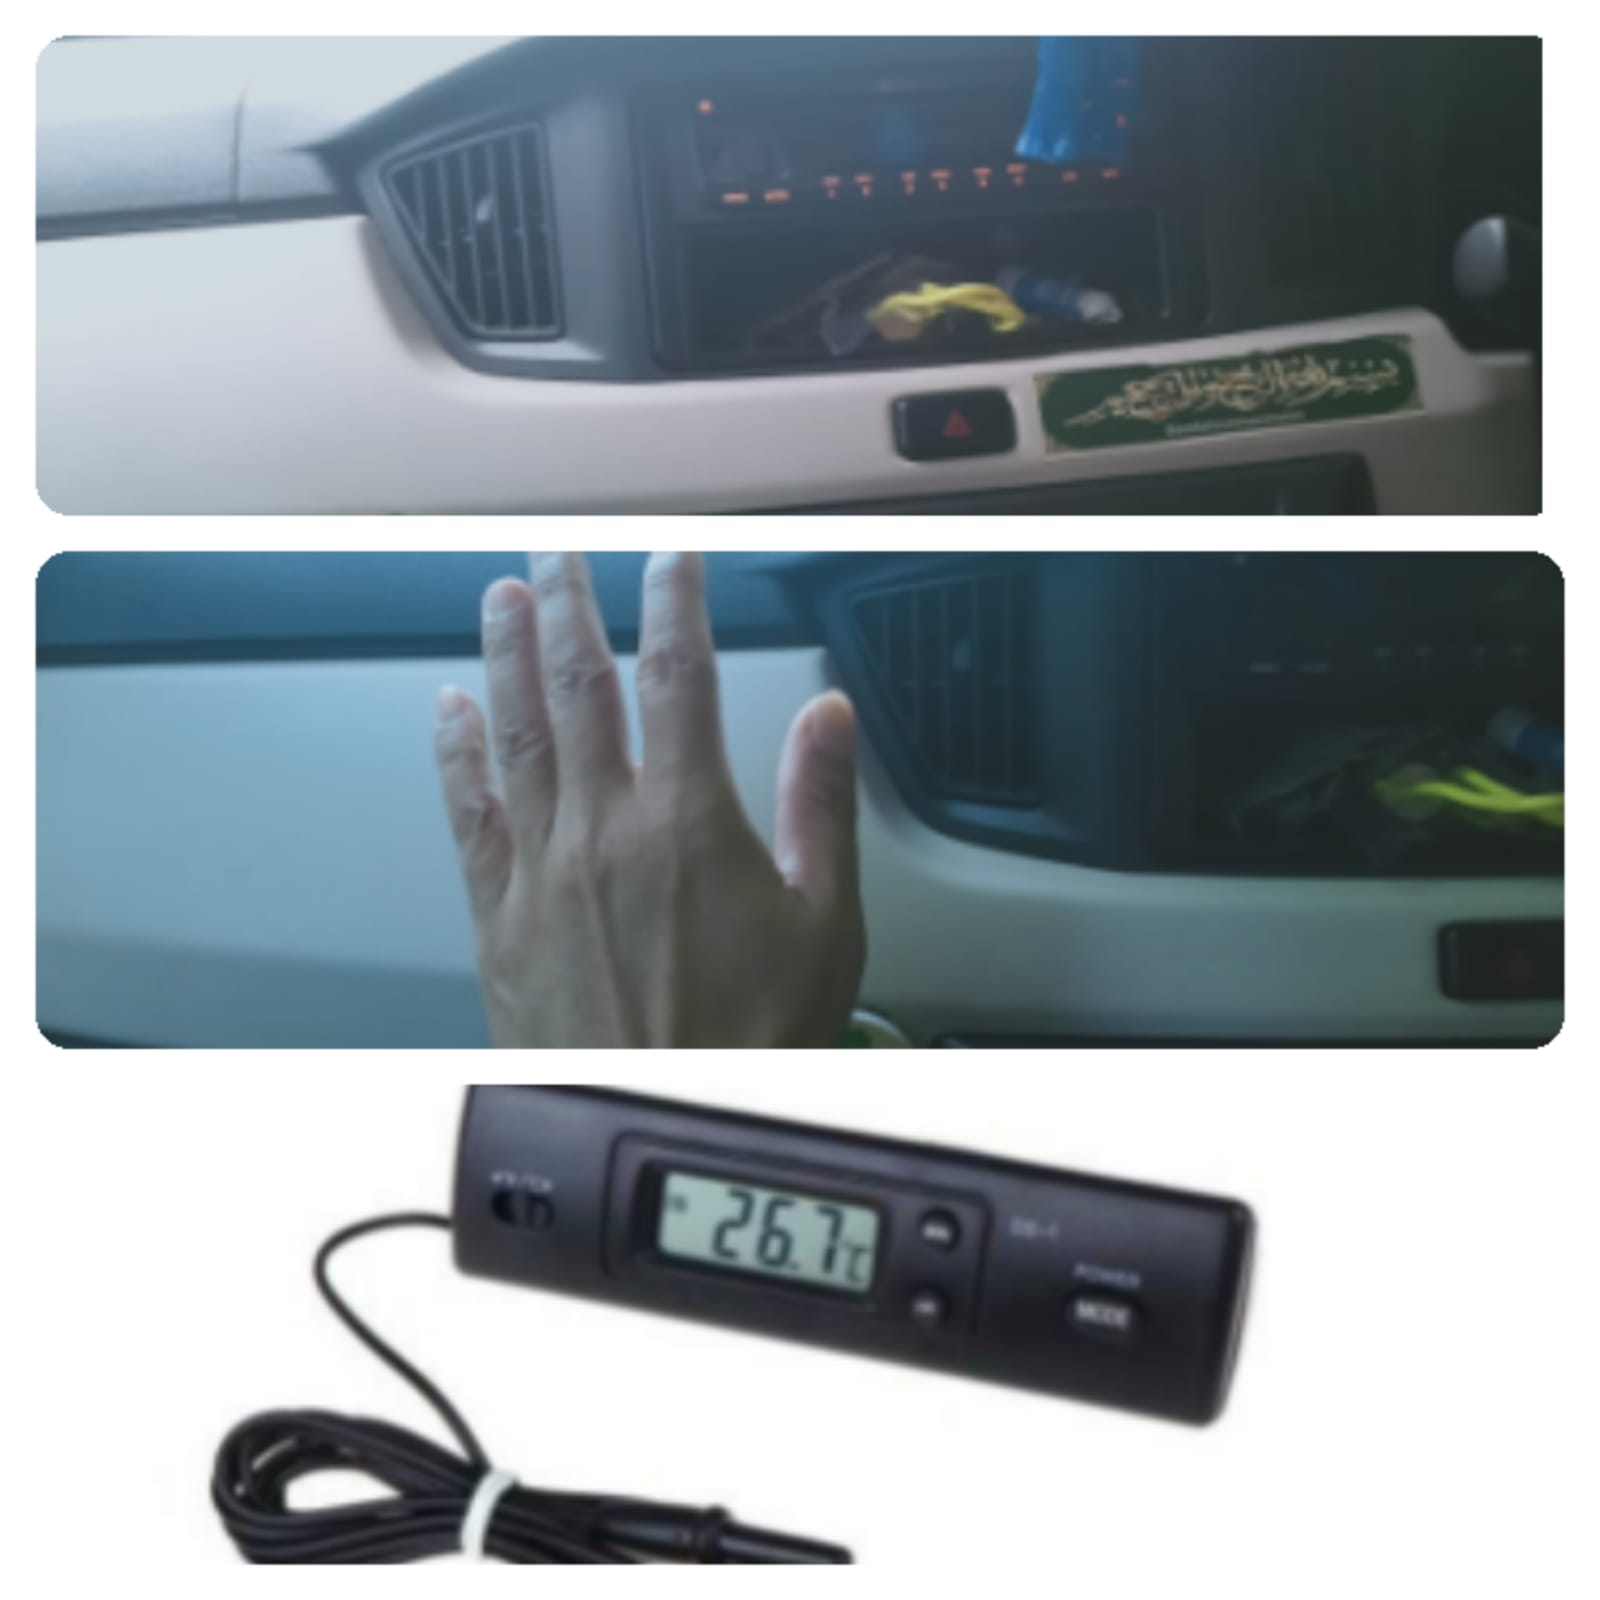 Bagaimana Cara Mengetahui Suhu Dingin AC Mobil?